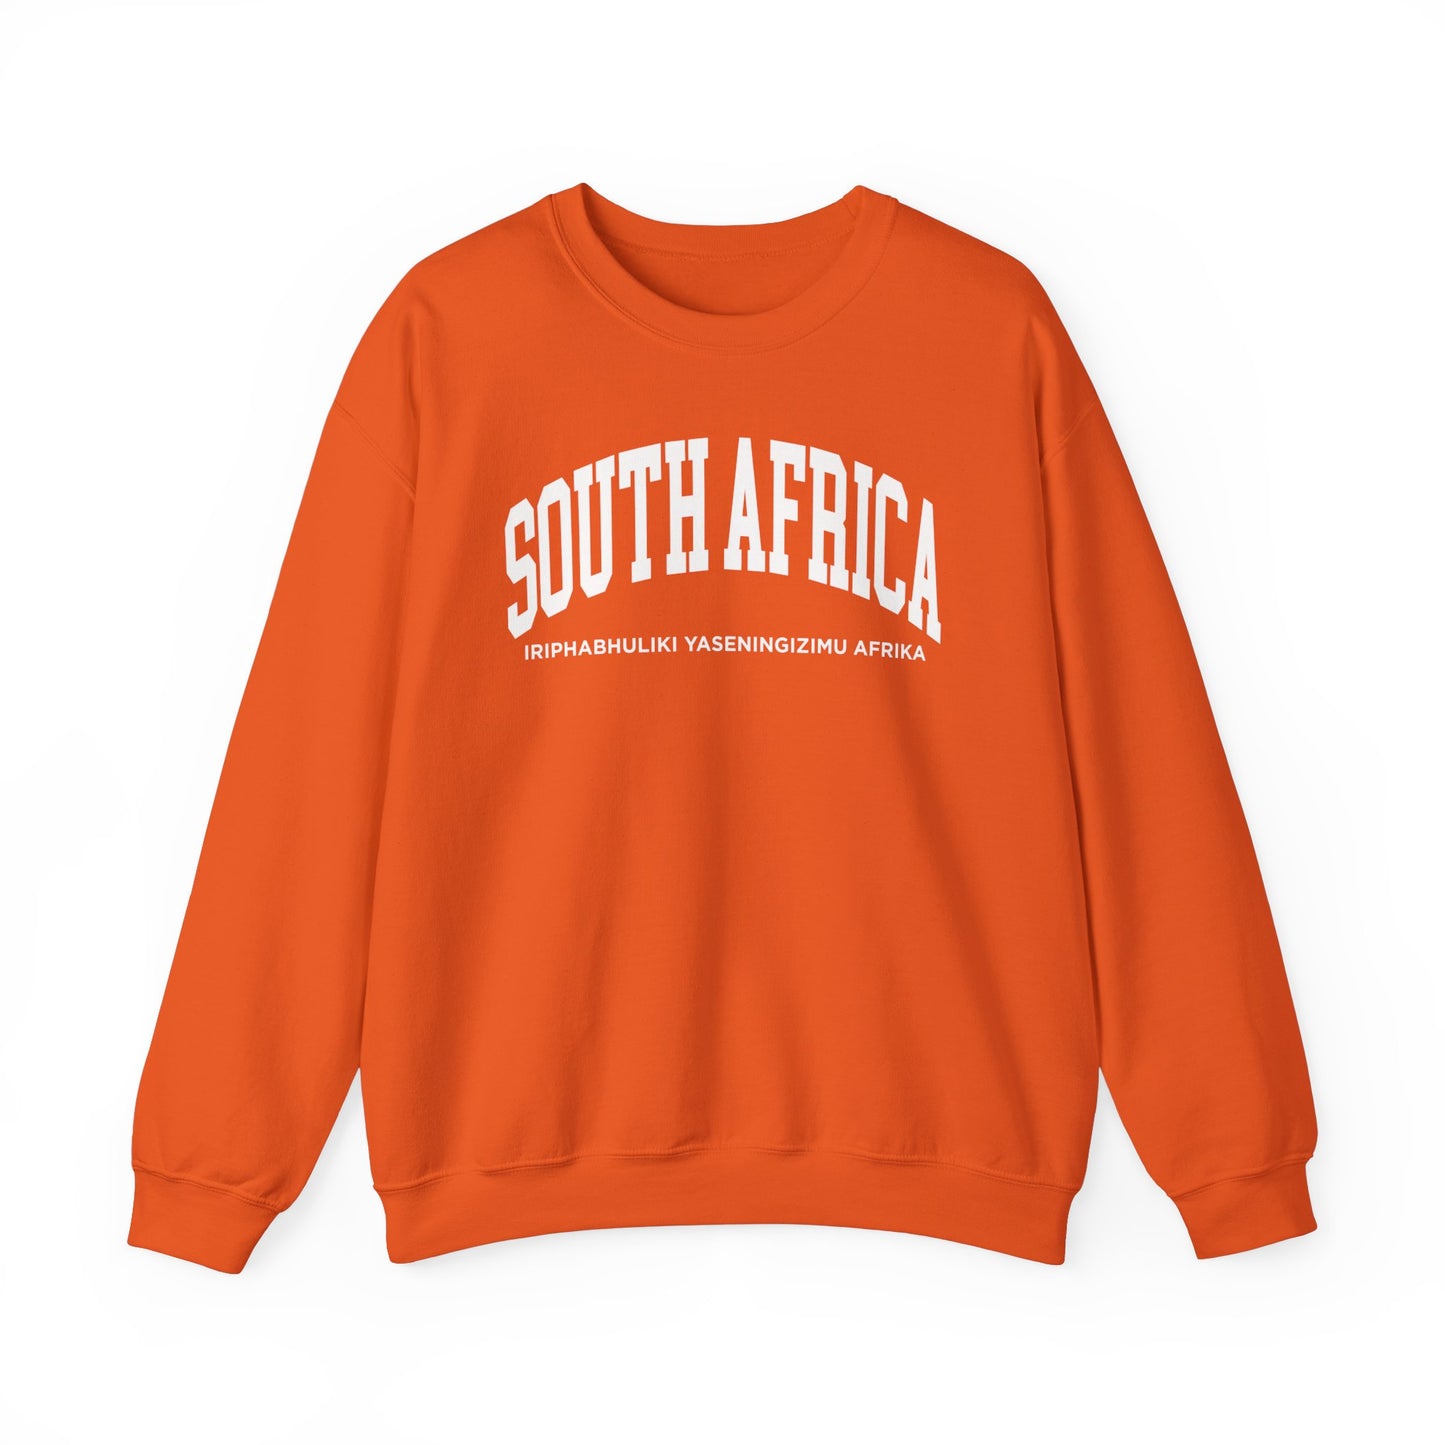 South Africa Sweatshirt